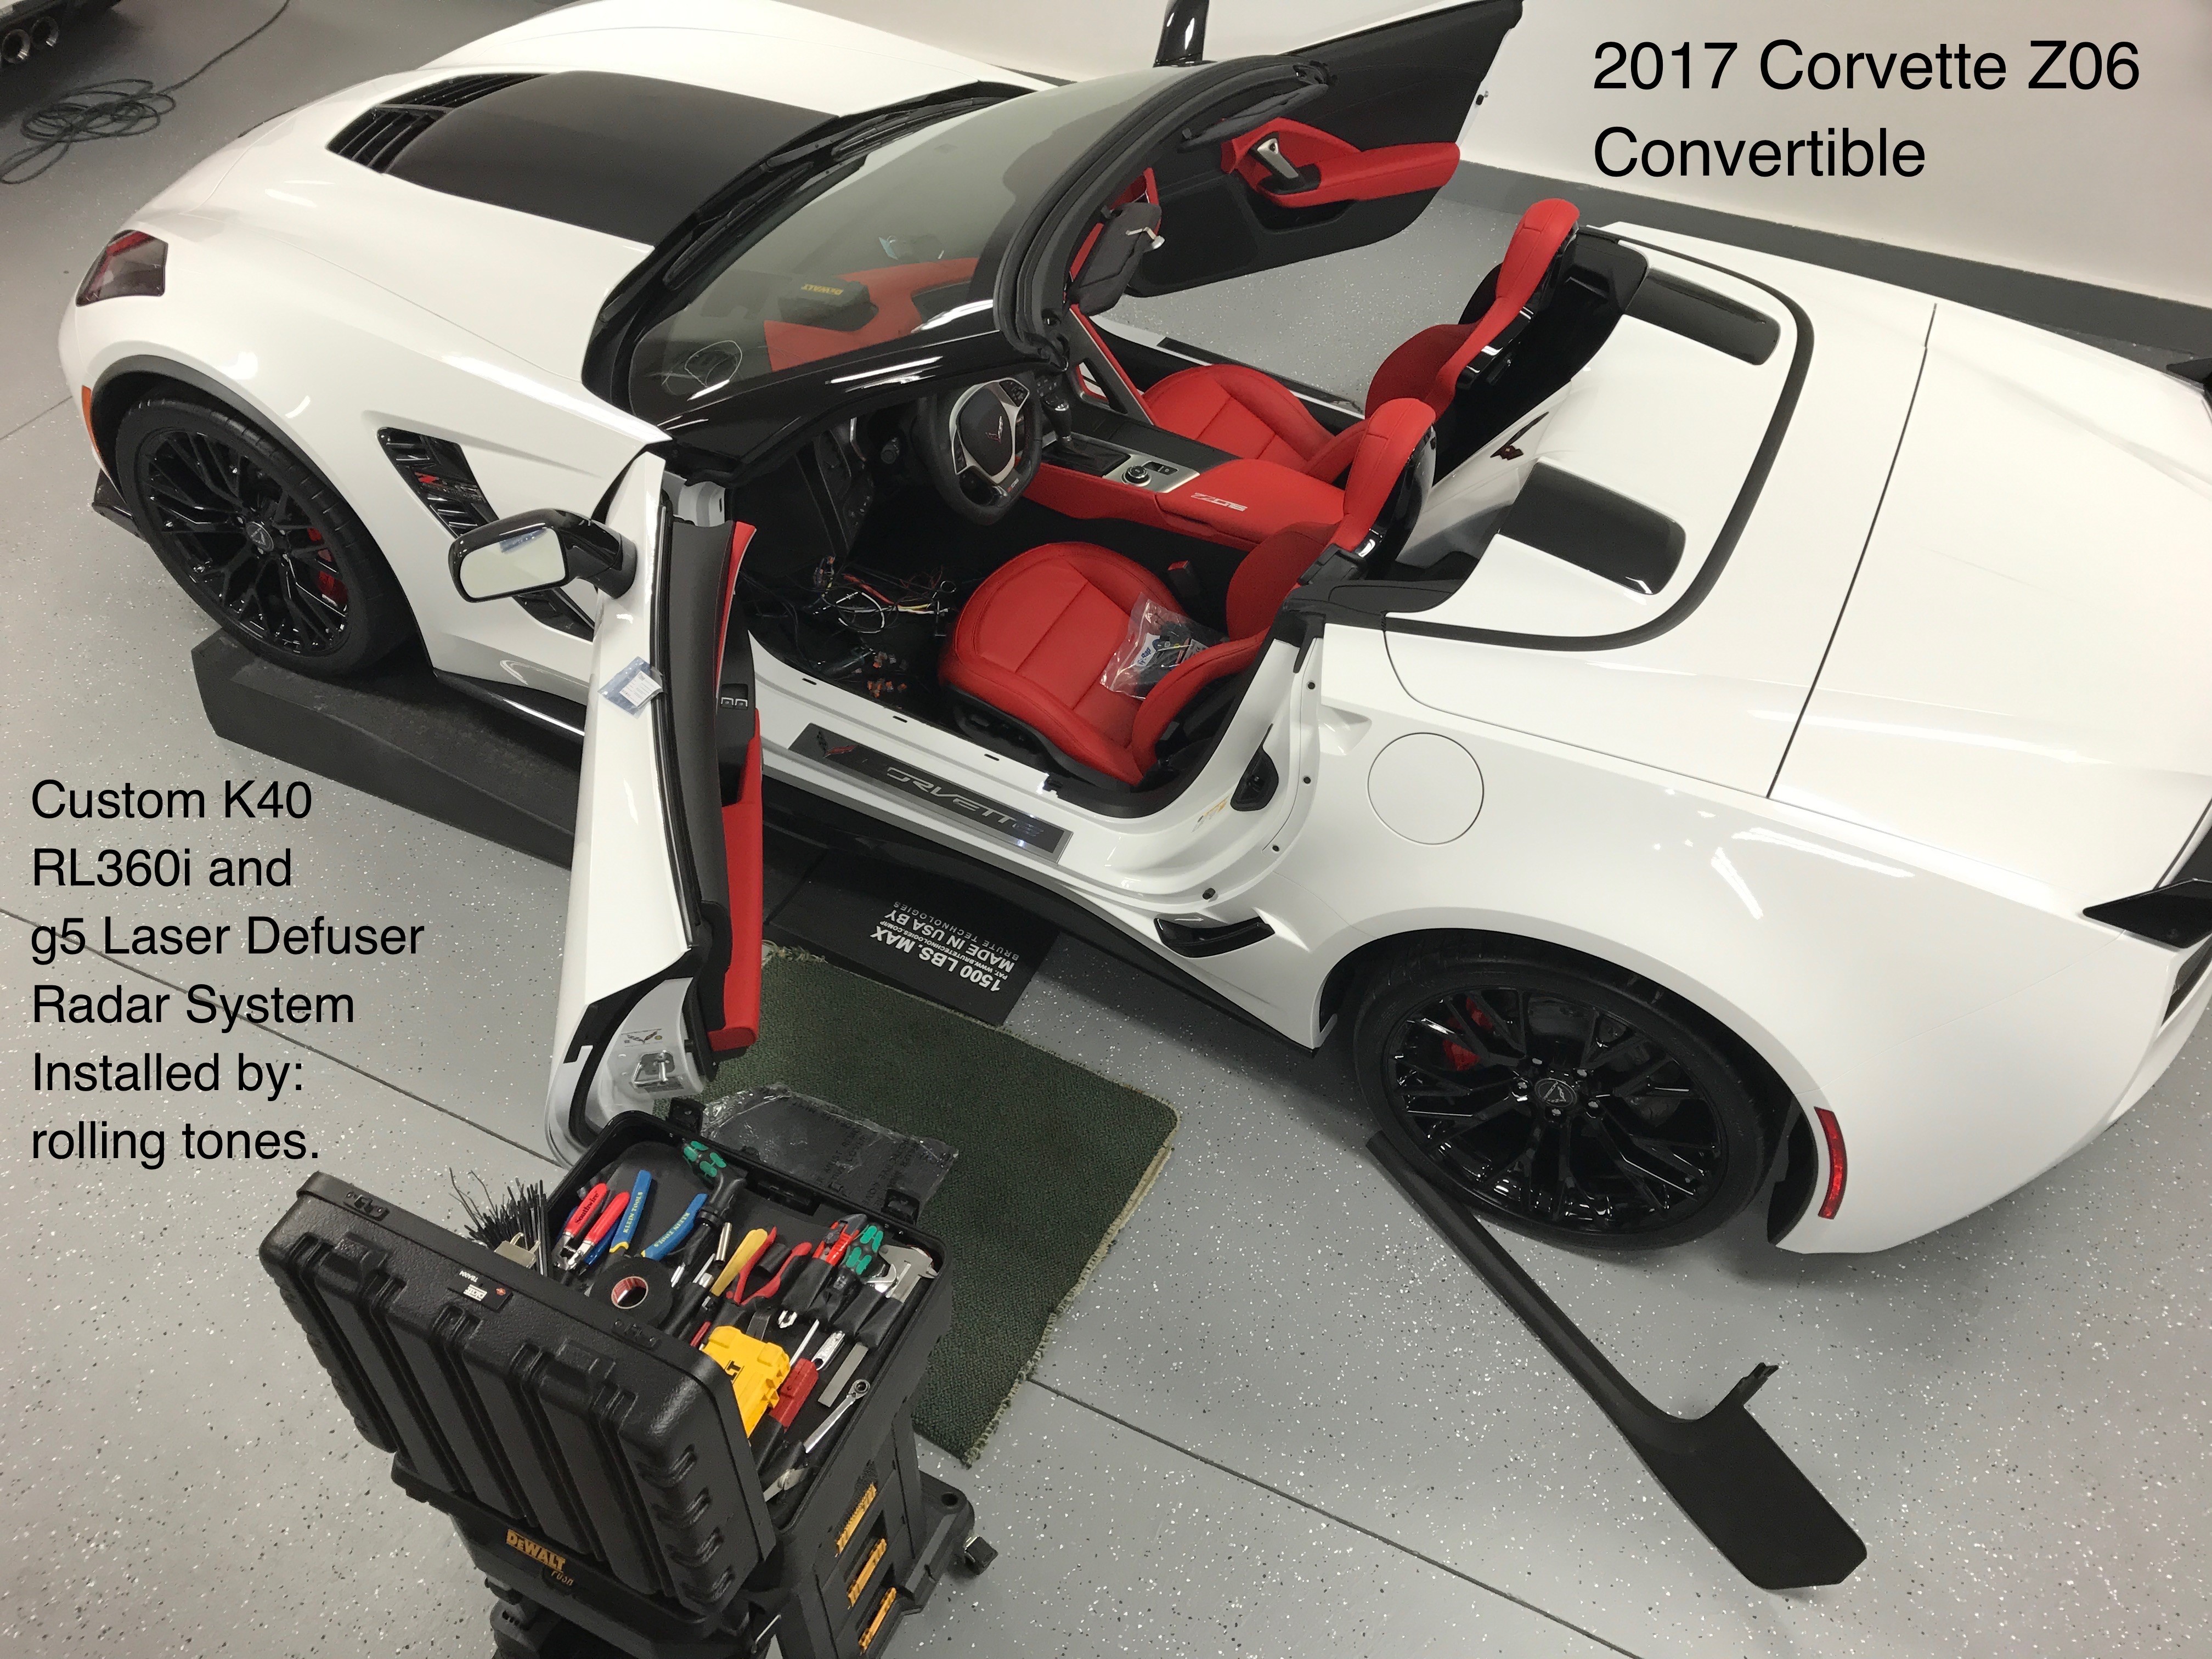 Custom K40 Police Laser Jammers and Hidden Radar Receiver Installed on 2017 Corvette Z06, Concord, NC